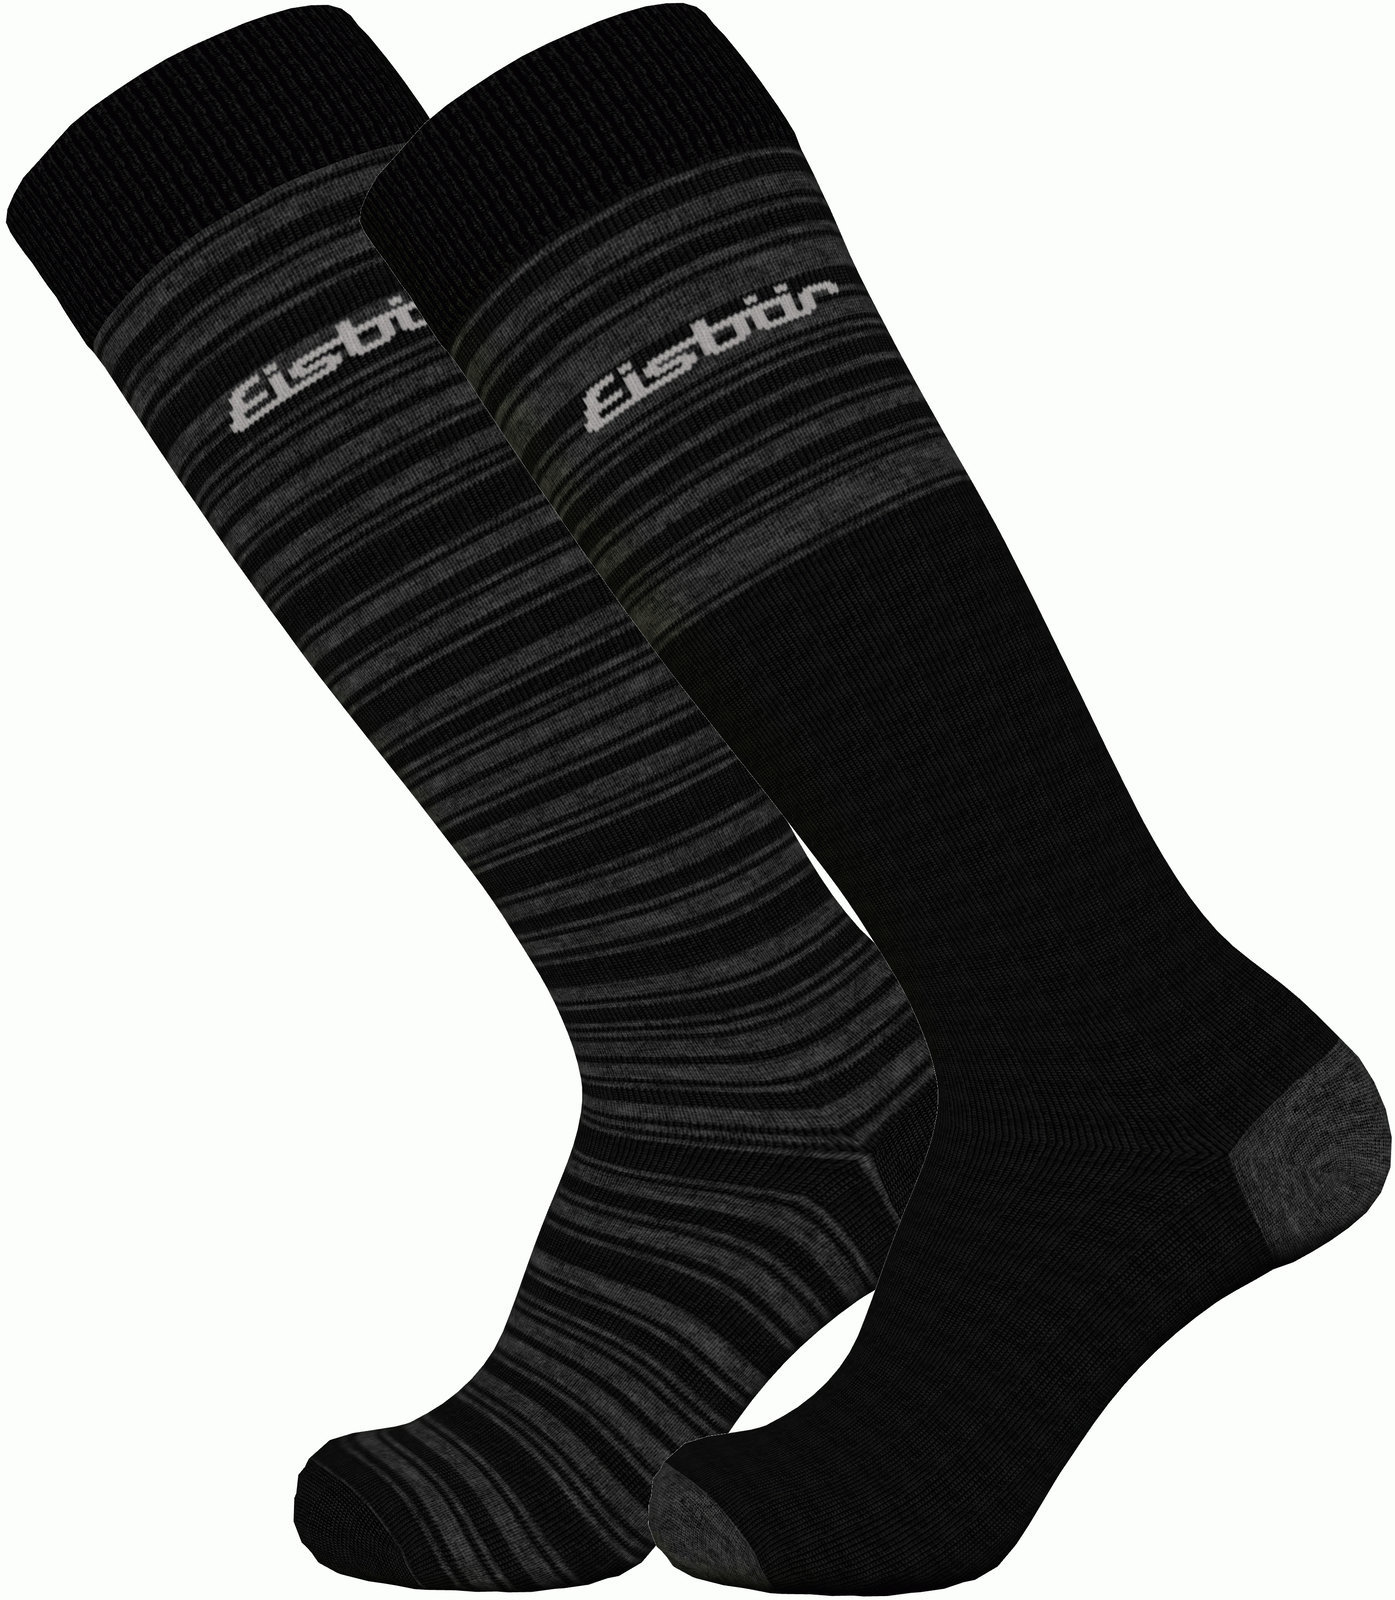 Skijaške čarape Eisbär Ski Comfort 2 Pack Black/Grey 39-42